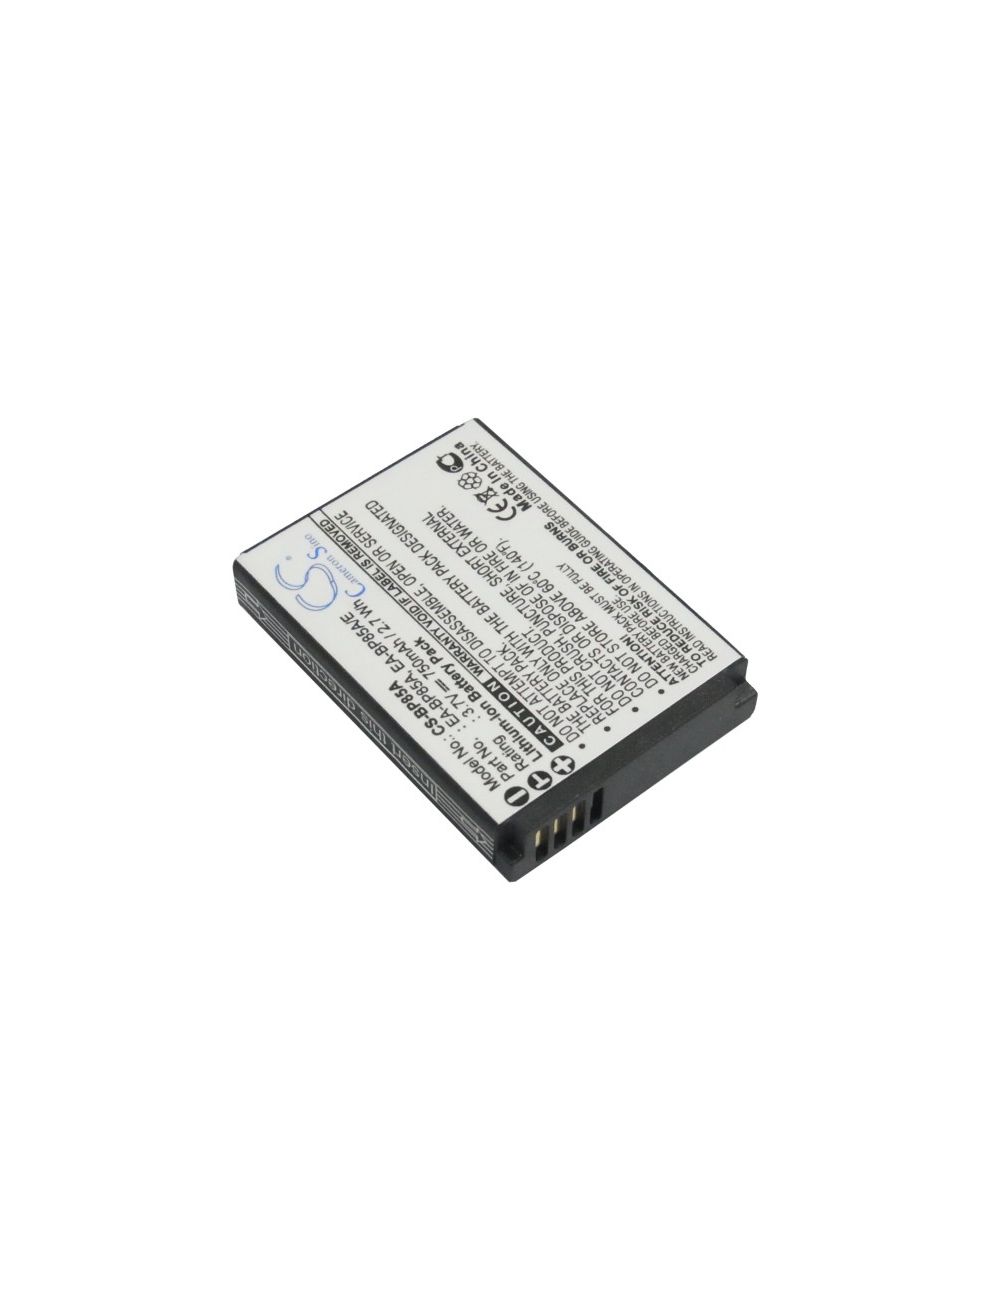 Batería Samsung BP85A, BP-85A o SLB-85A compatible 3,7V 750mAh Li-Ion - CS-BP85A -  - 4894128039846 - 1